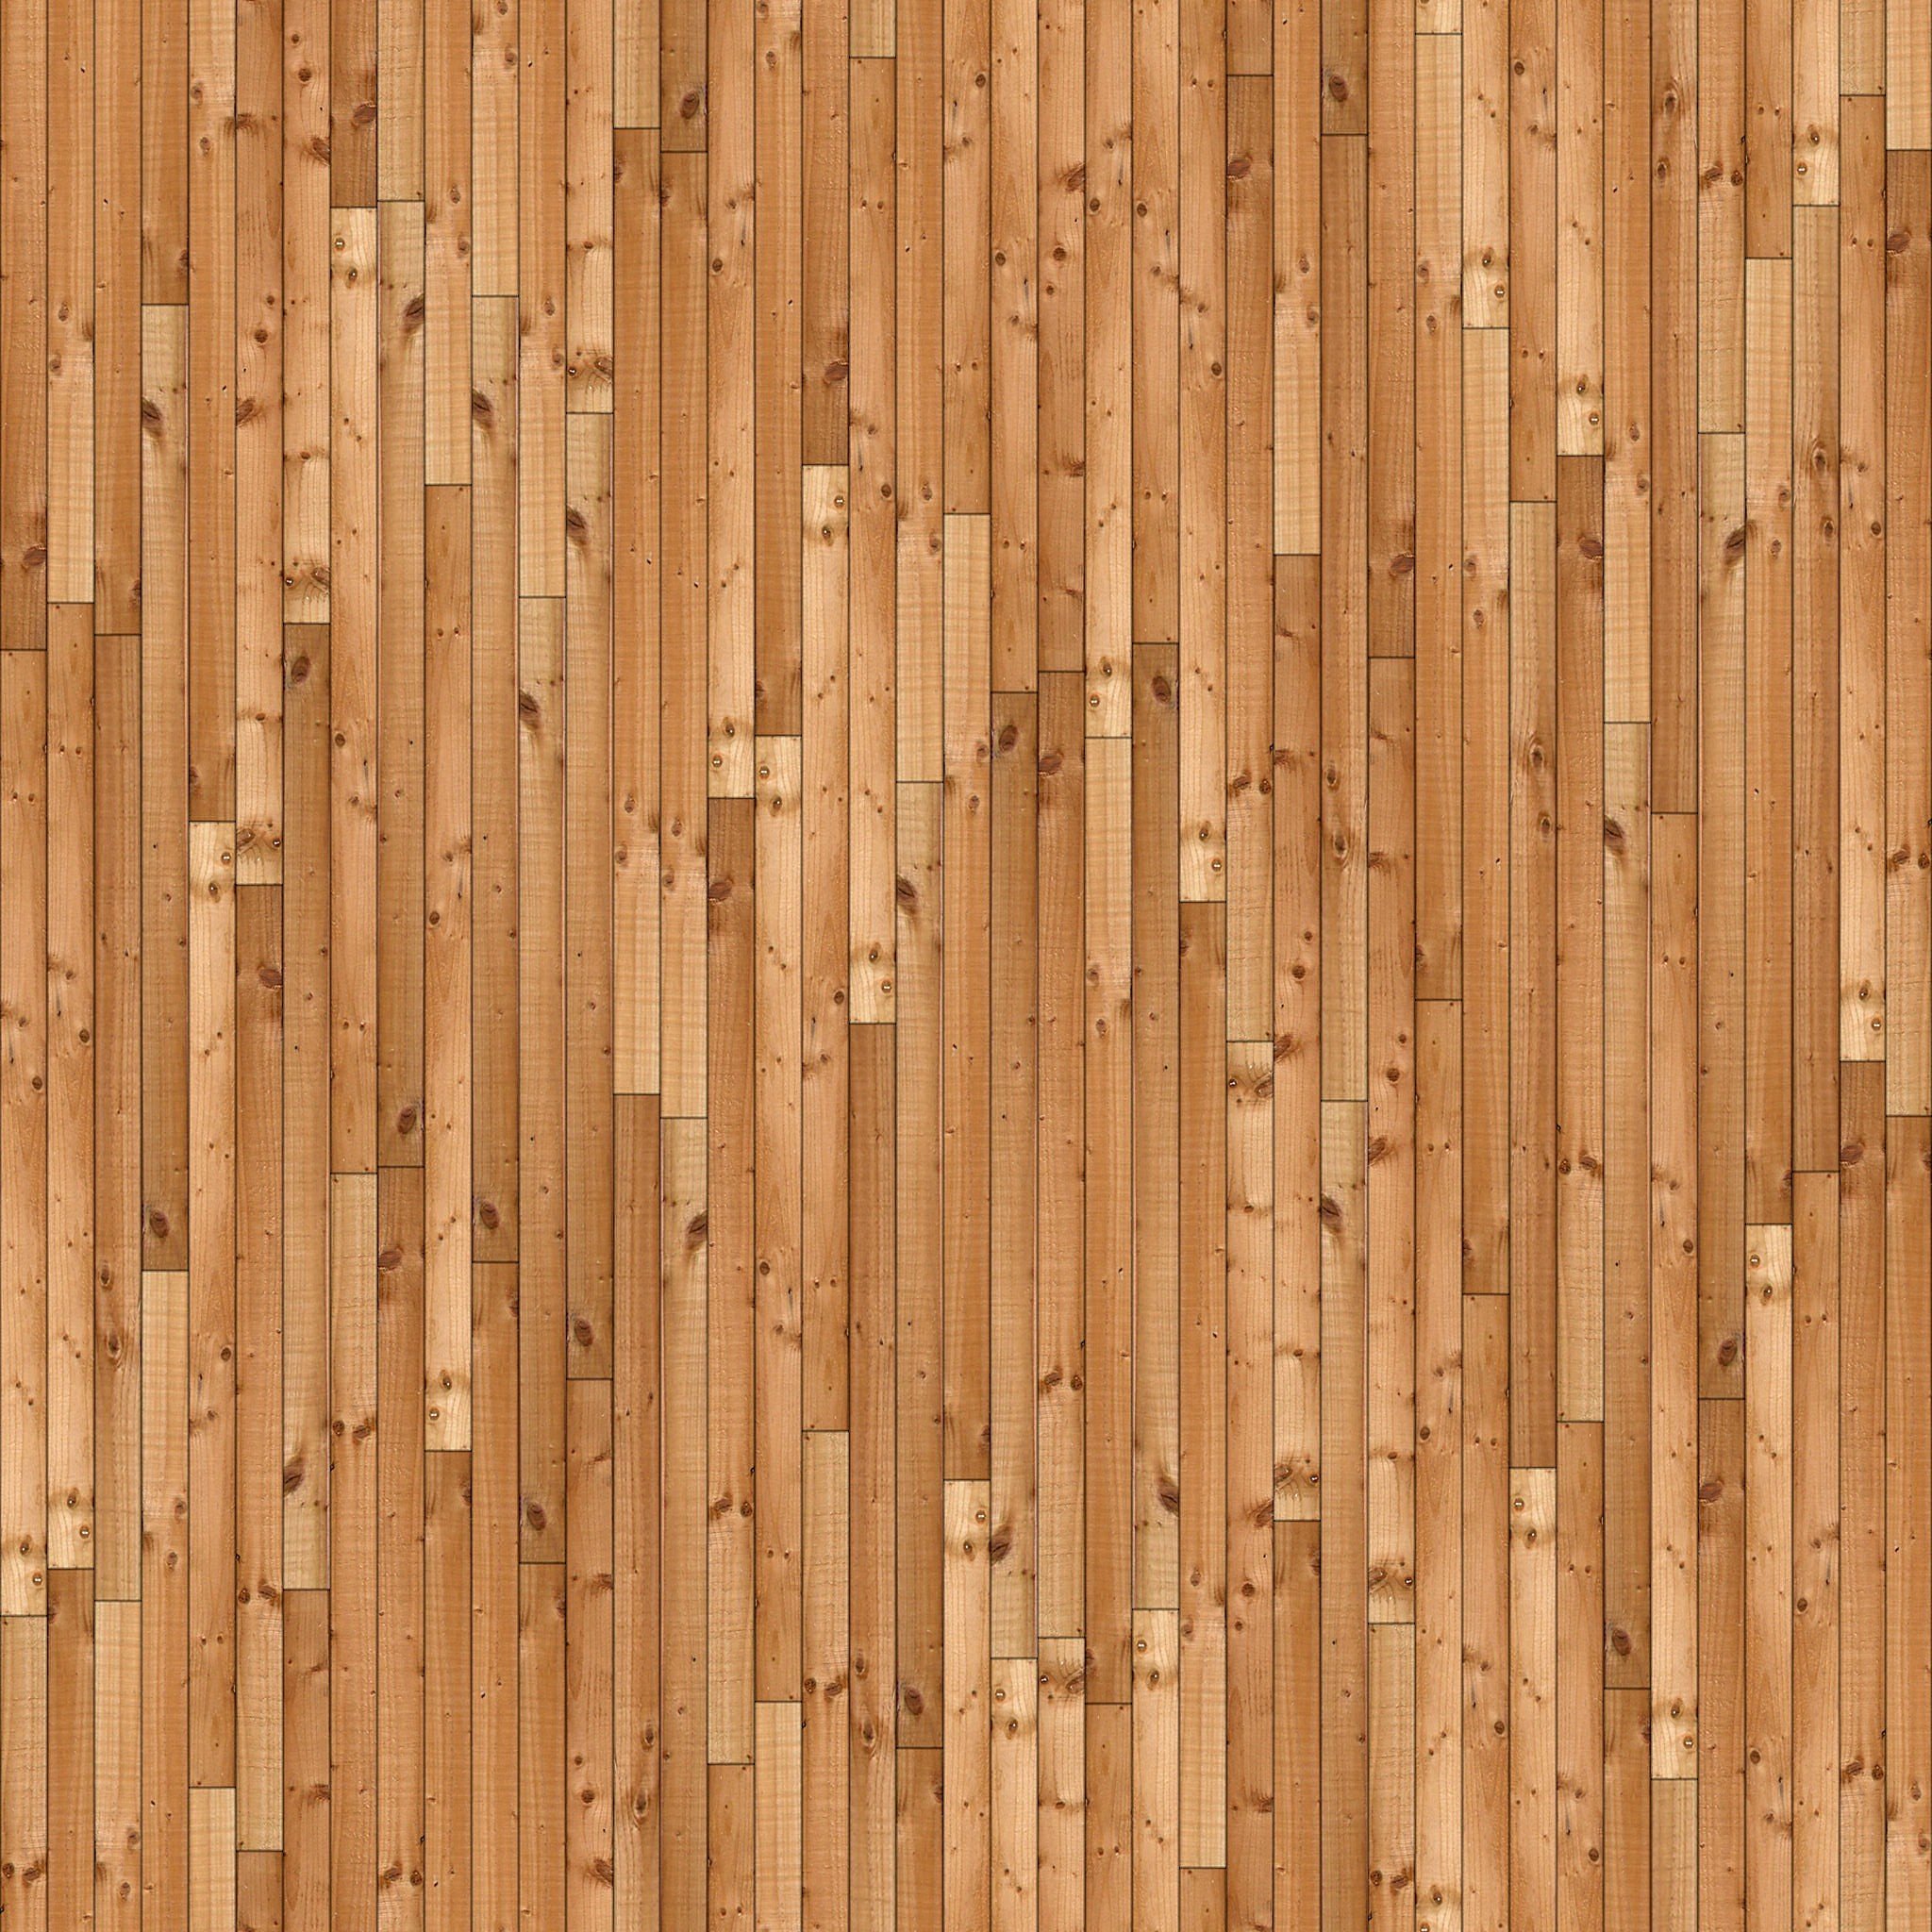 Wooden patterns. Линолеум Таркетт бамбук. Материал дерево бесшовный. Текстура дерева. Деревянное покрытие.